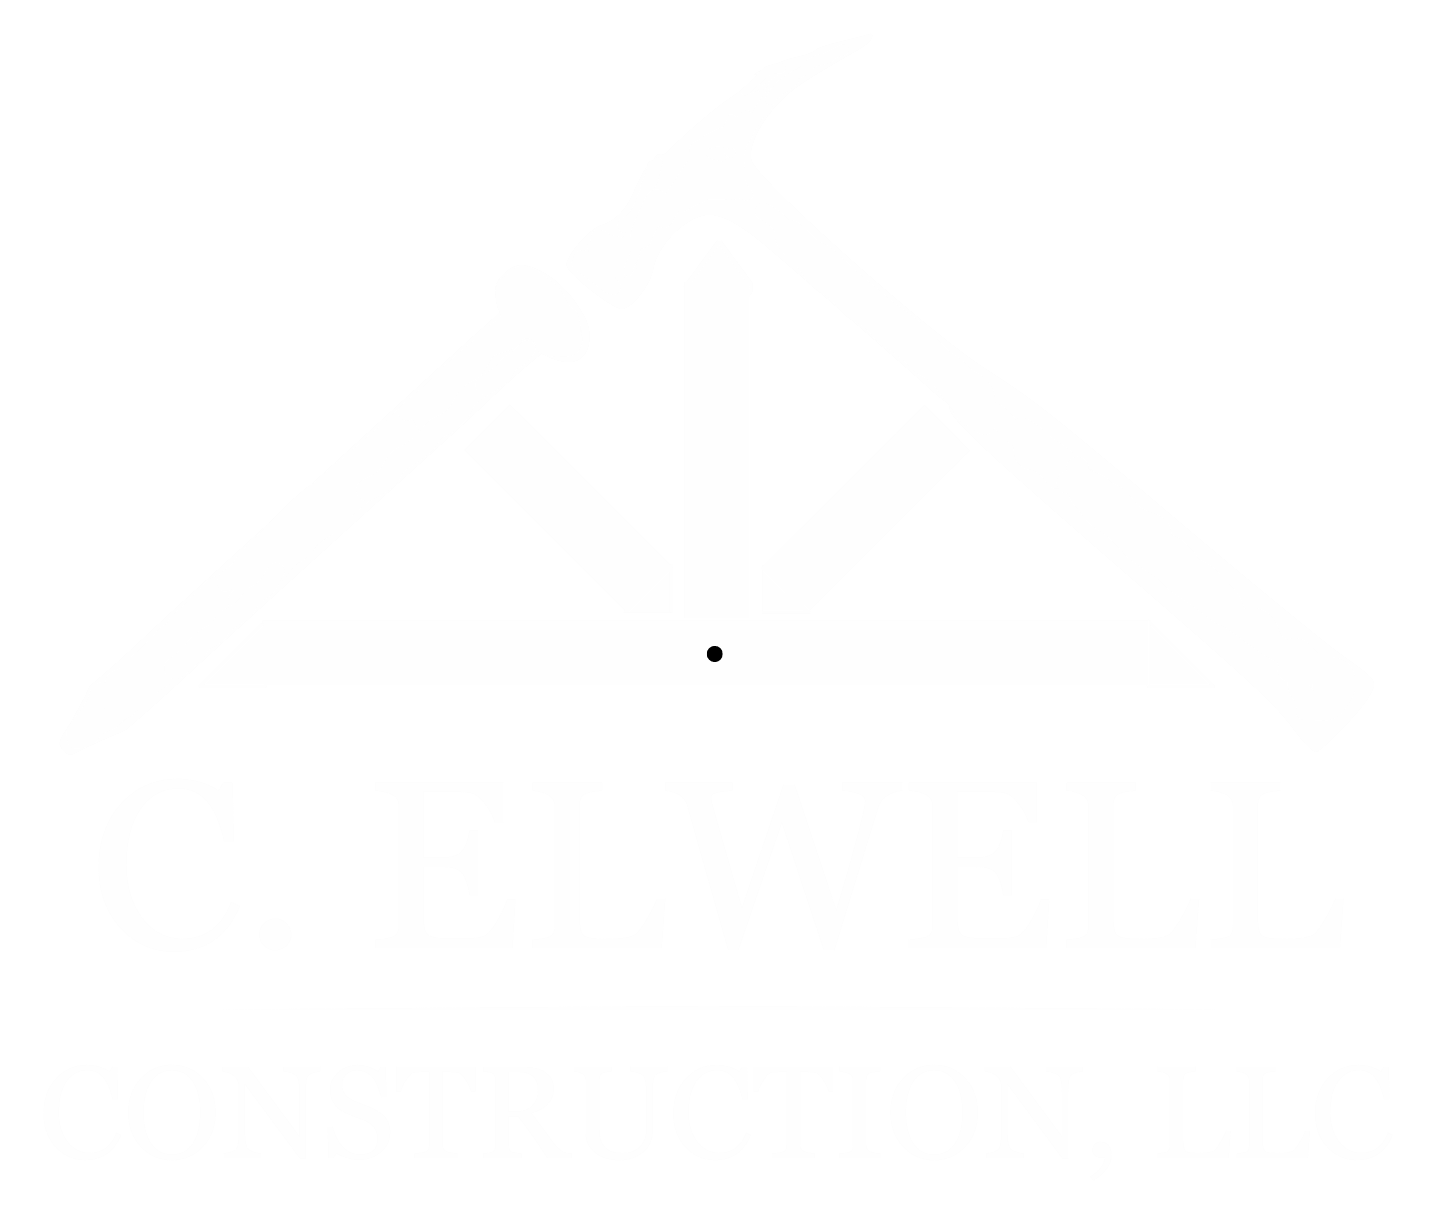 C. Elwell Construction, LLC